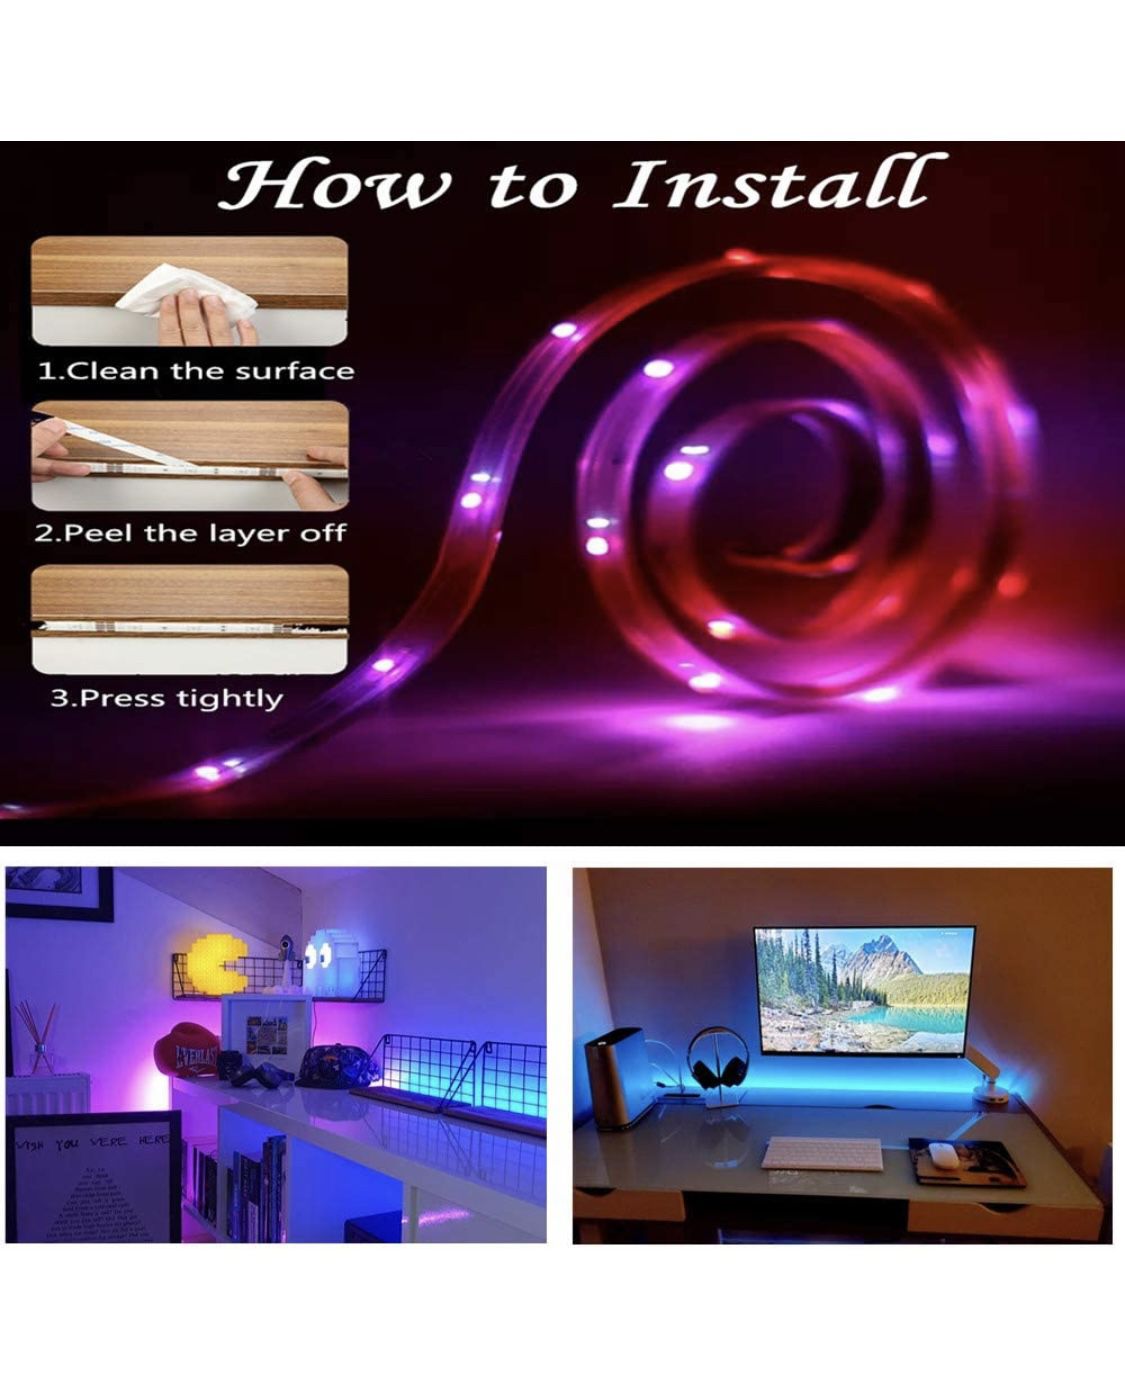 99 ft Led Light Strip,Led Color Changing Lights with Remote,Mood Lighting for Bedroom, Gaming Desk,Gaming Chair,Room Decoration SMD 5050 Strip Lights